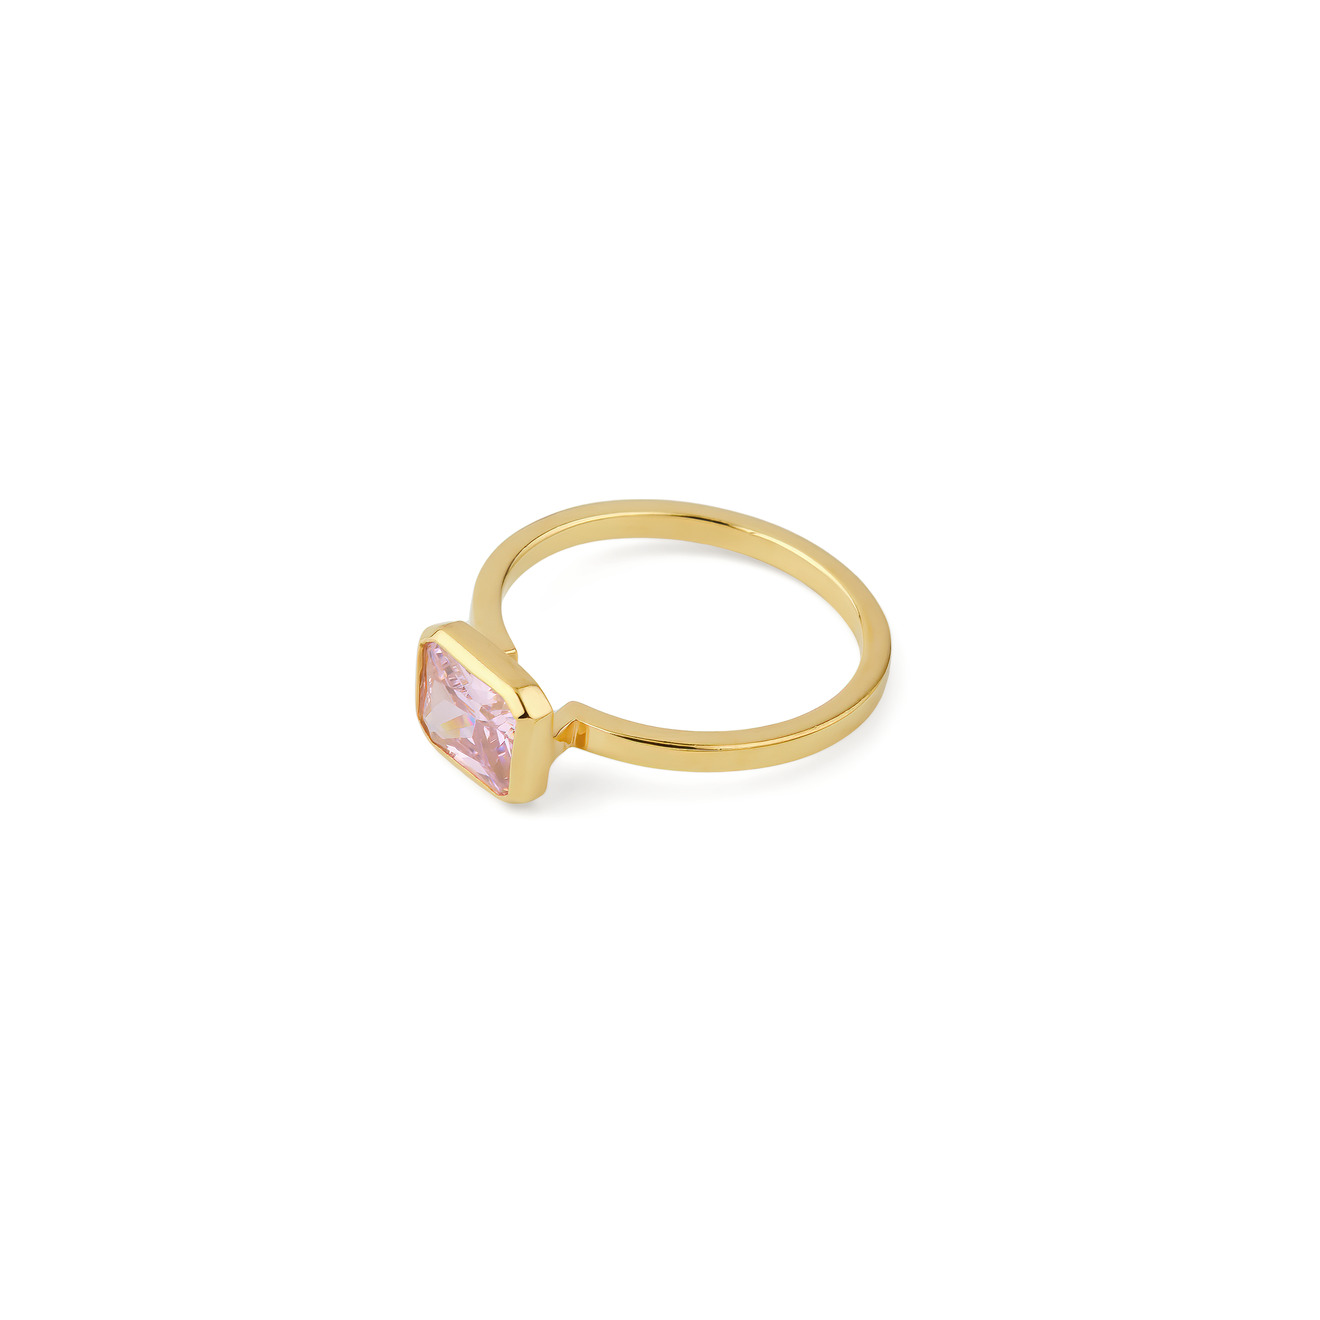 KRASHE jewellery Позолоченное кольцо Lollypop с розовым кристаллом цена и фото